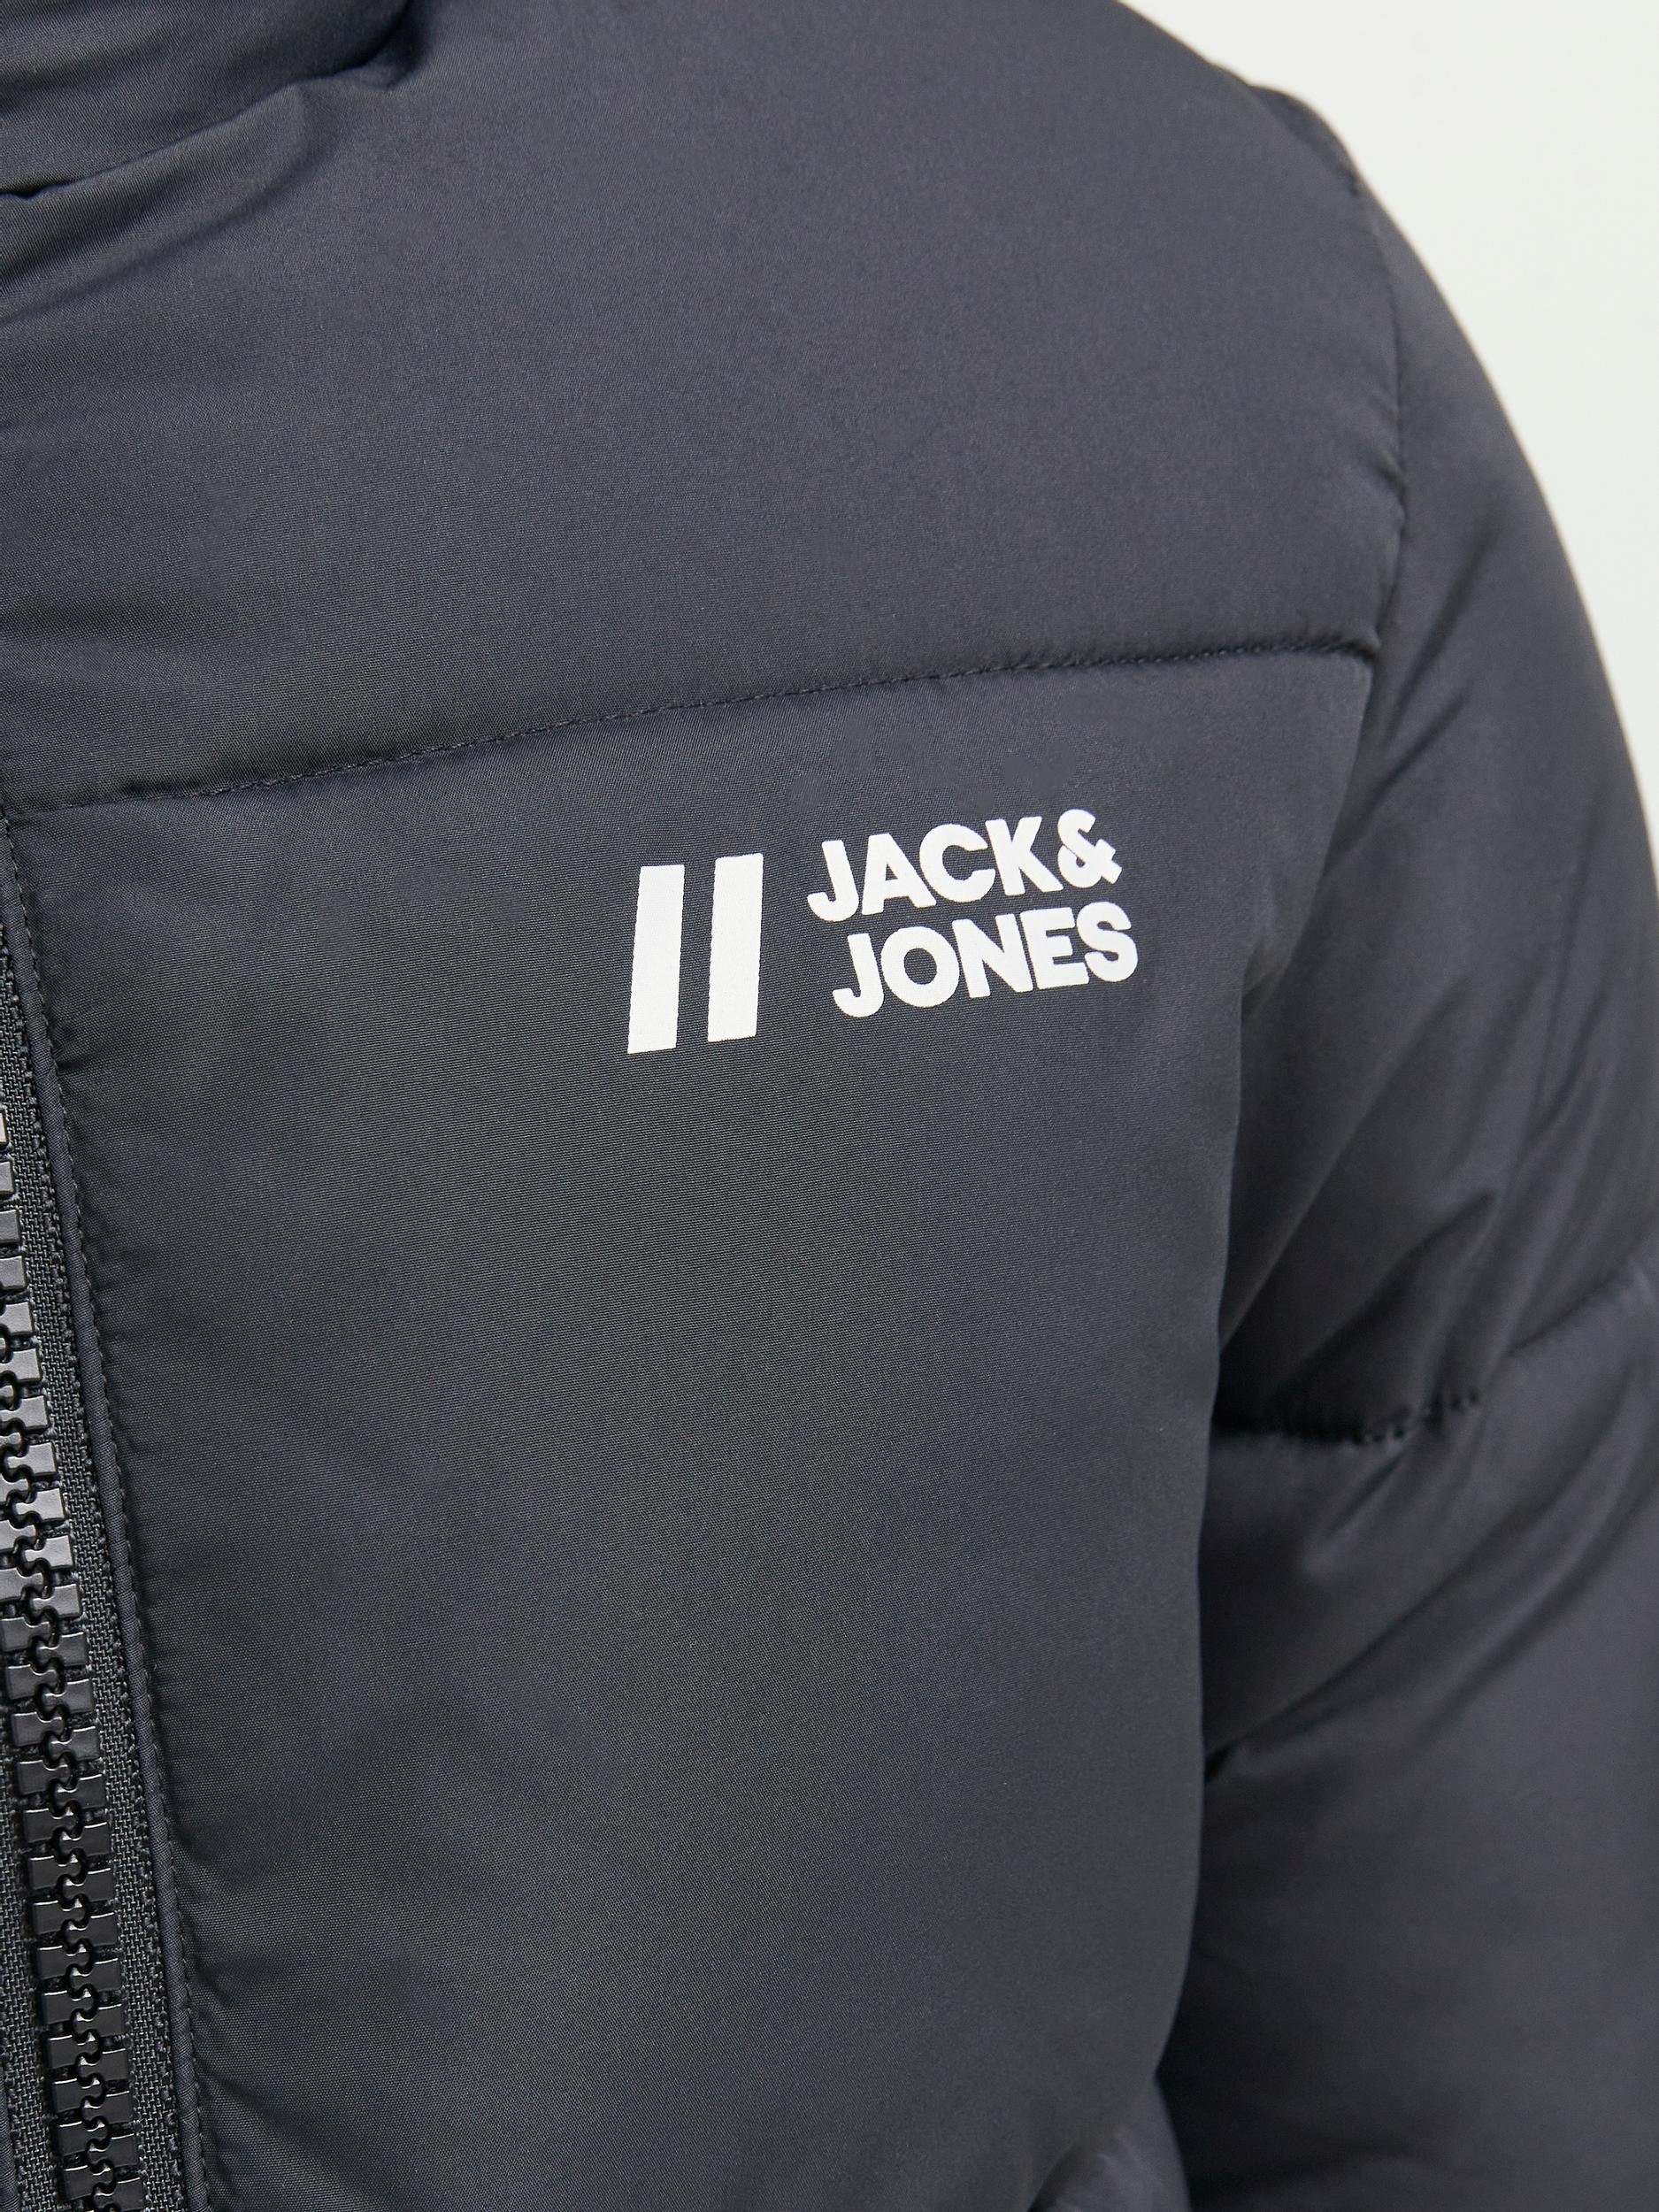 Jack & Jones Junior Steppjacke Black